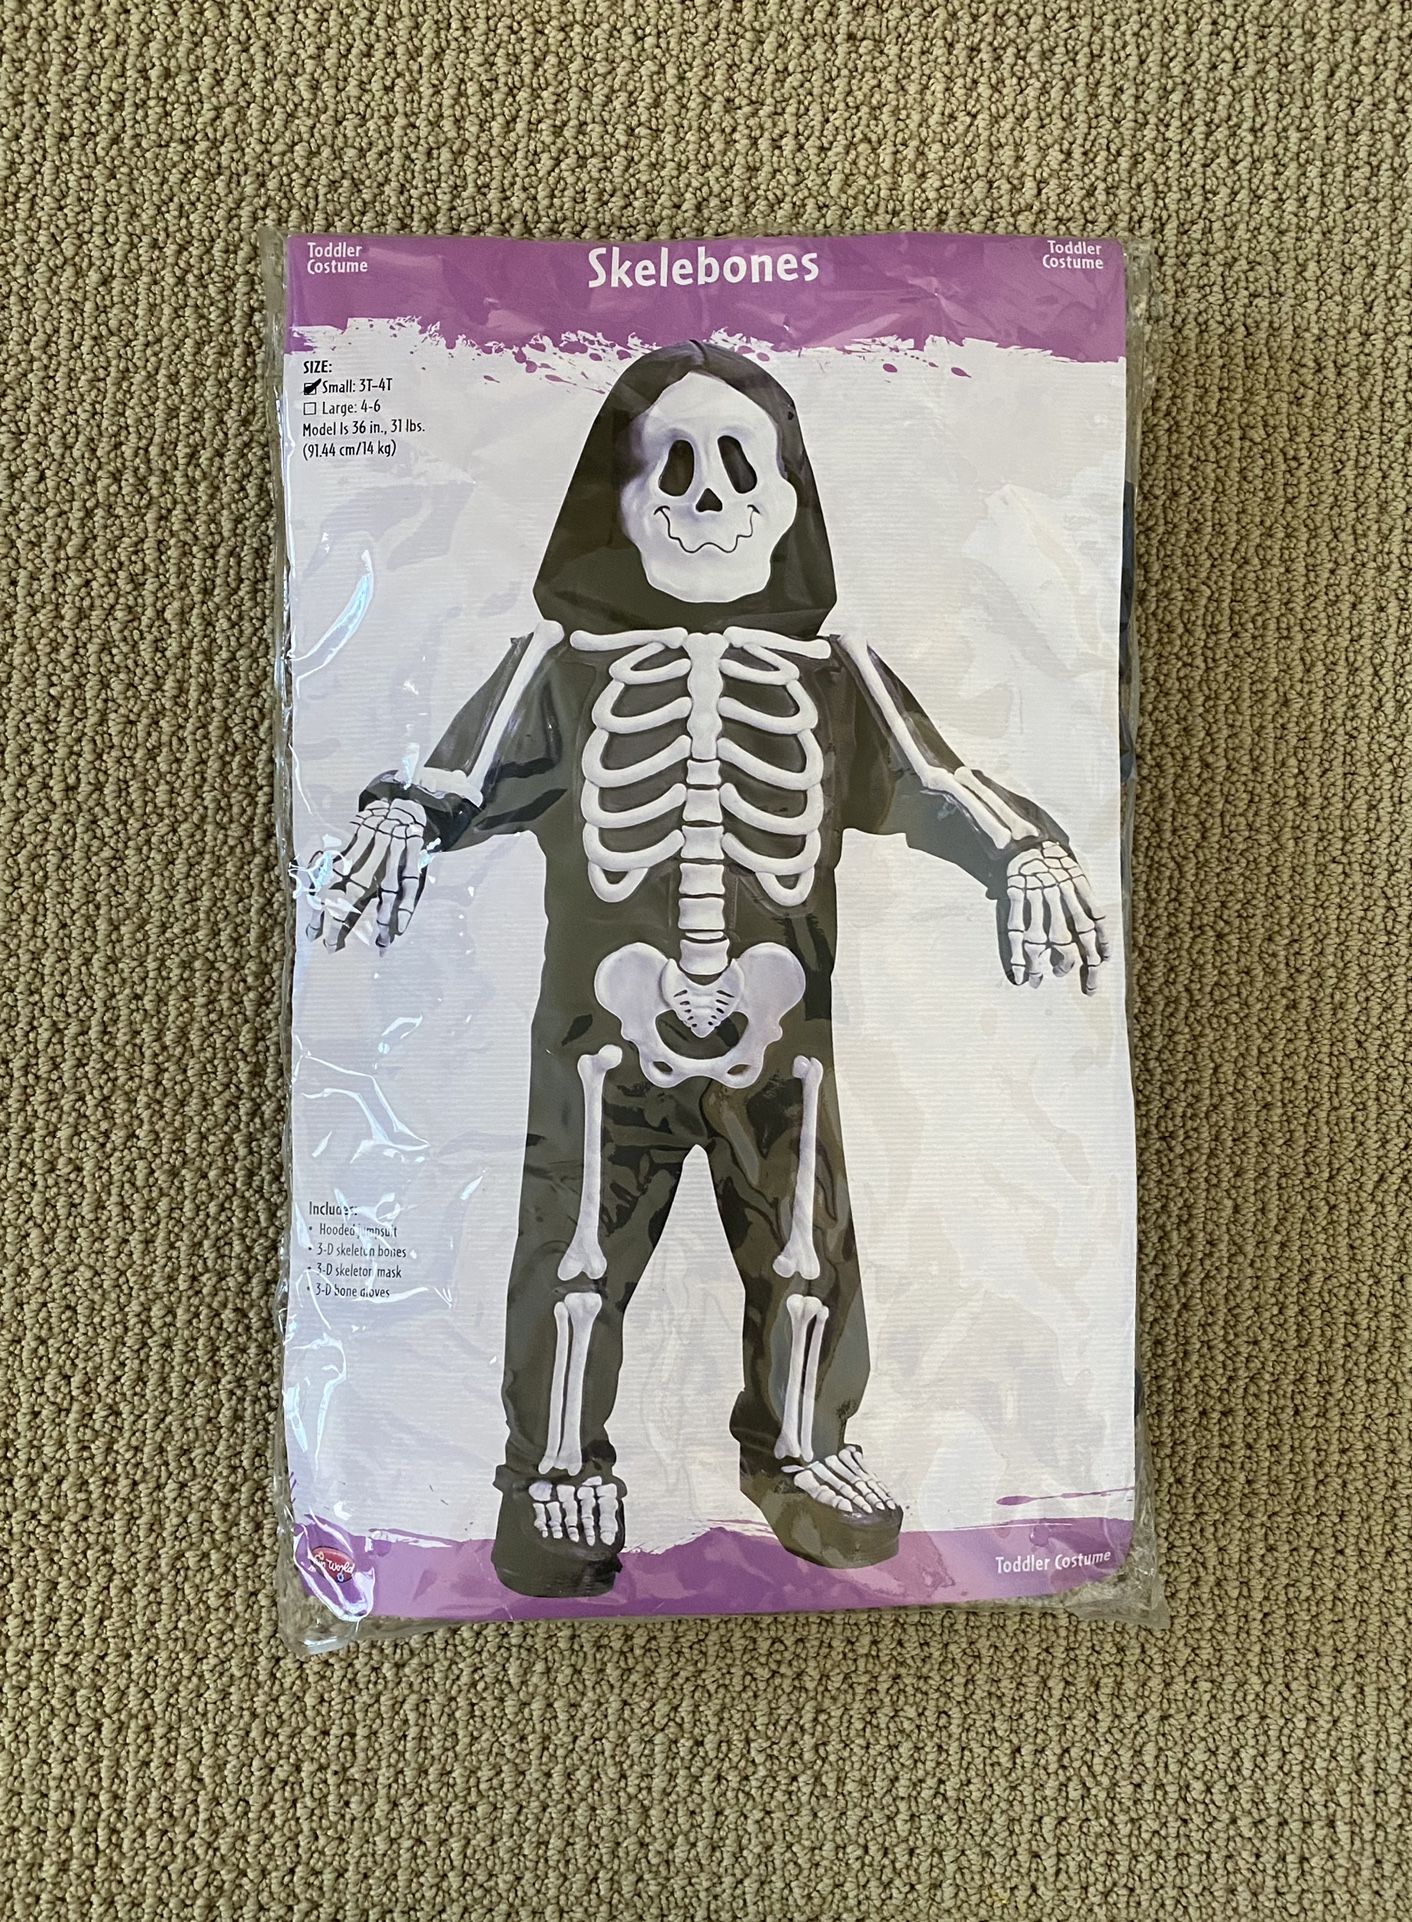 Skeleton Costume For Toddler Size 3T-4T